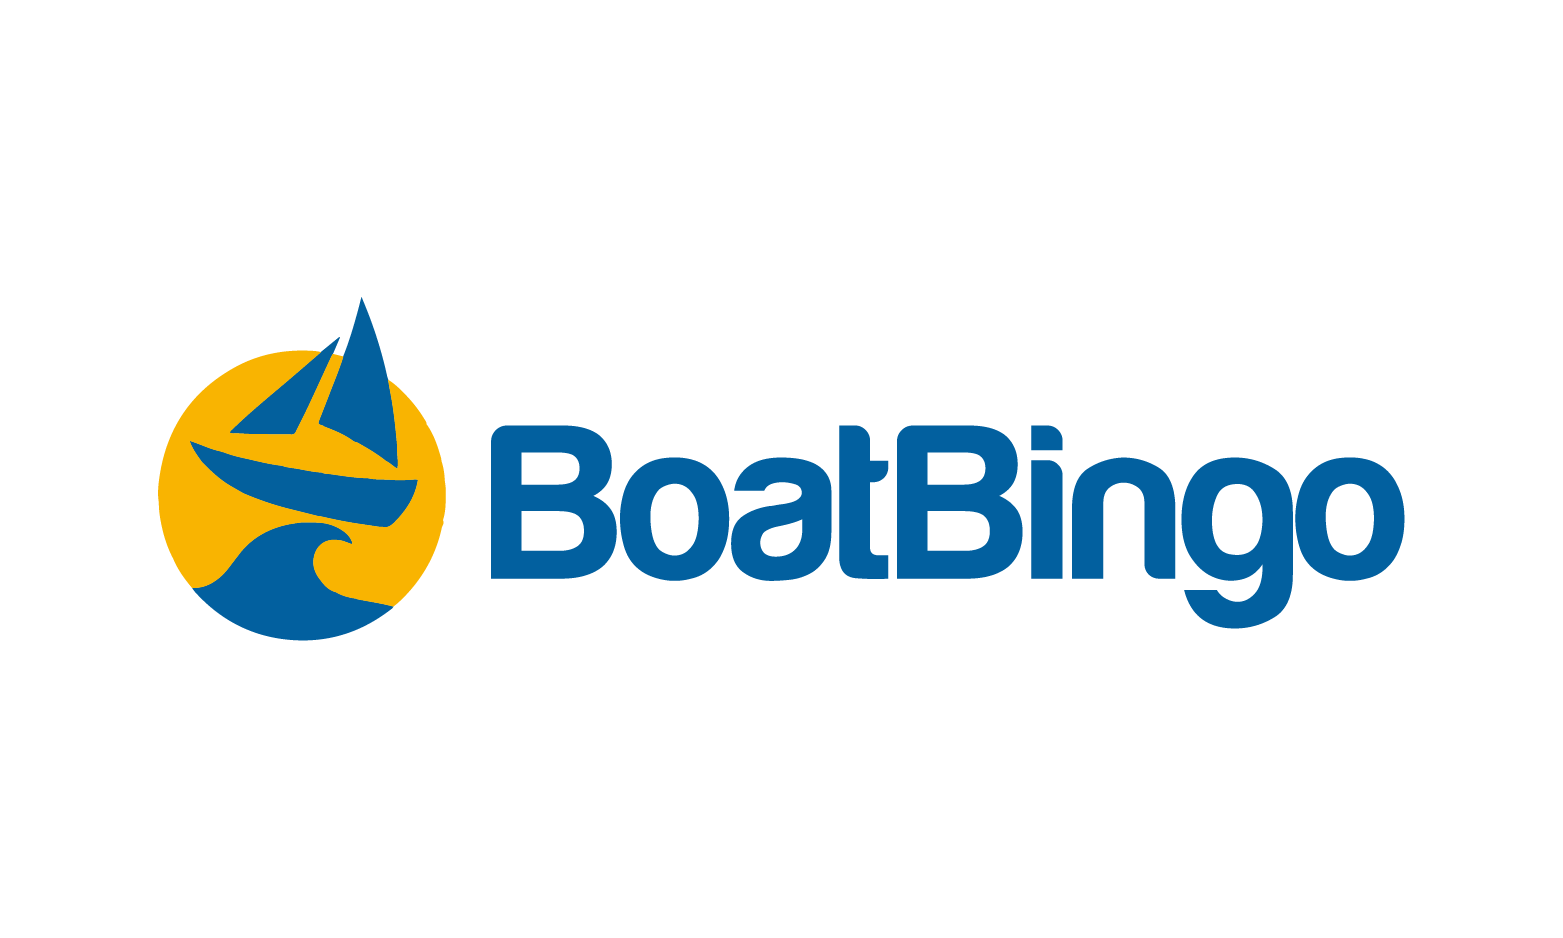 BoatBingo.com - Creative brandable domain for sale